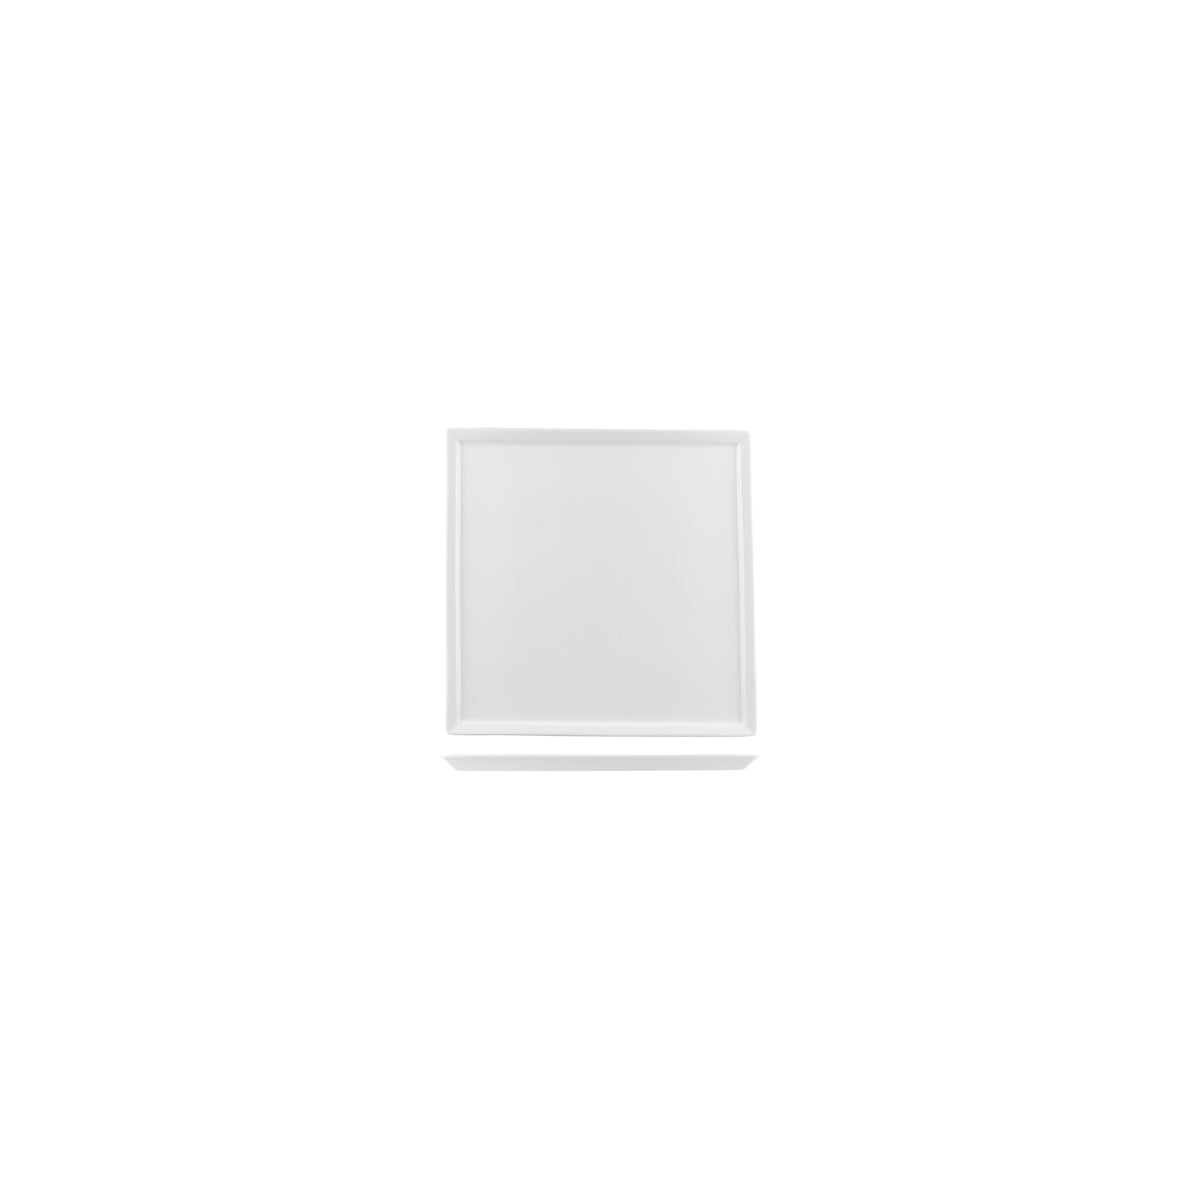 94821 Royal Porcelain White Album Square Plate 16x16mm (U3206) Tomkin Australia Hospitality Supplies